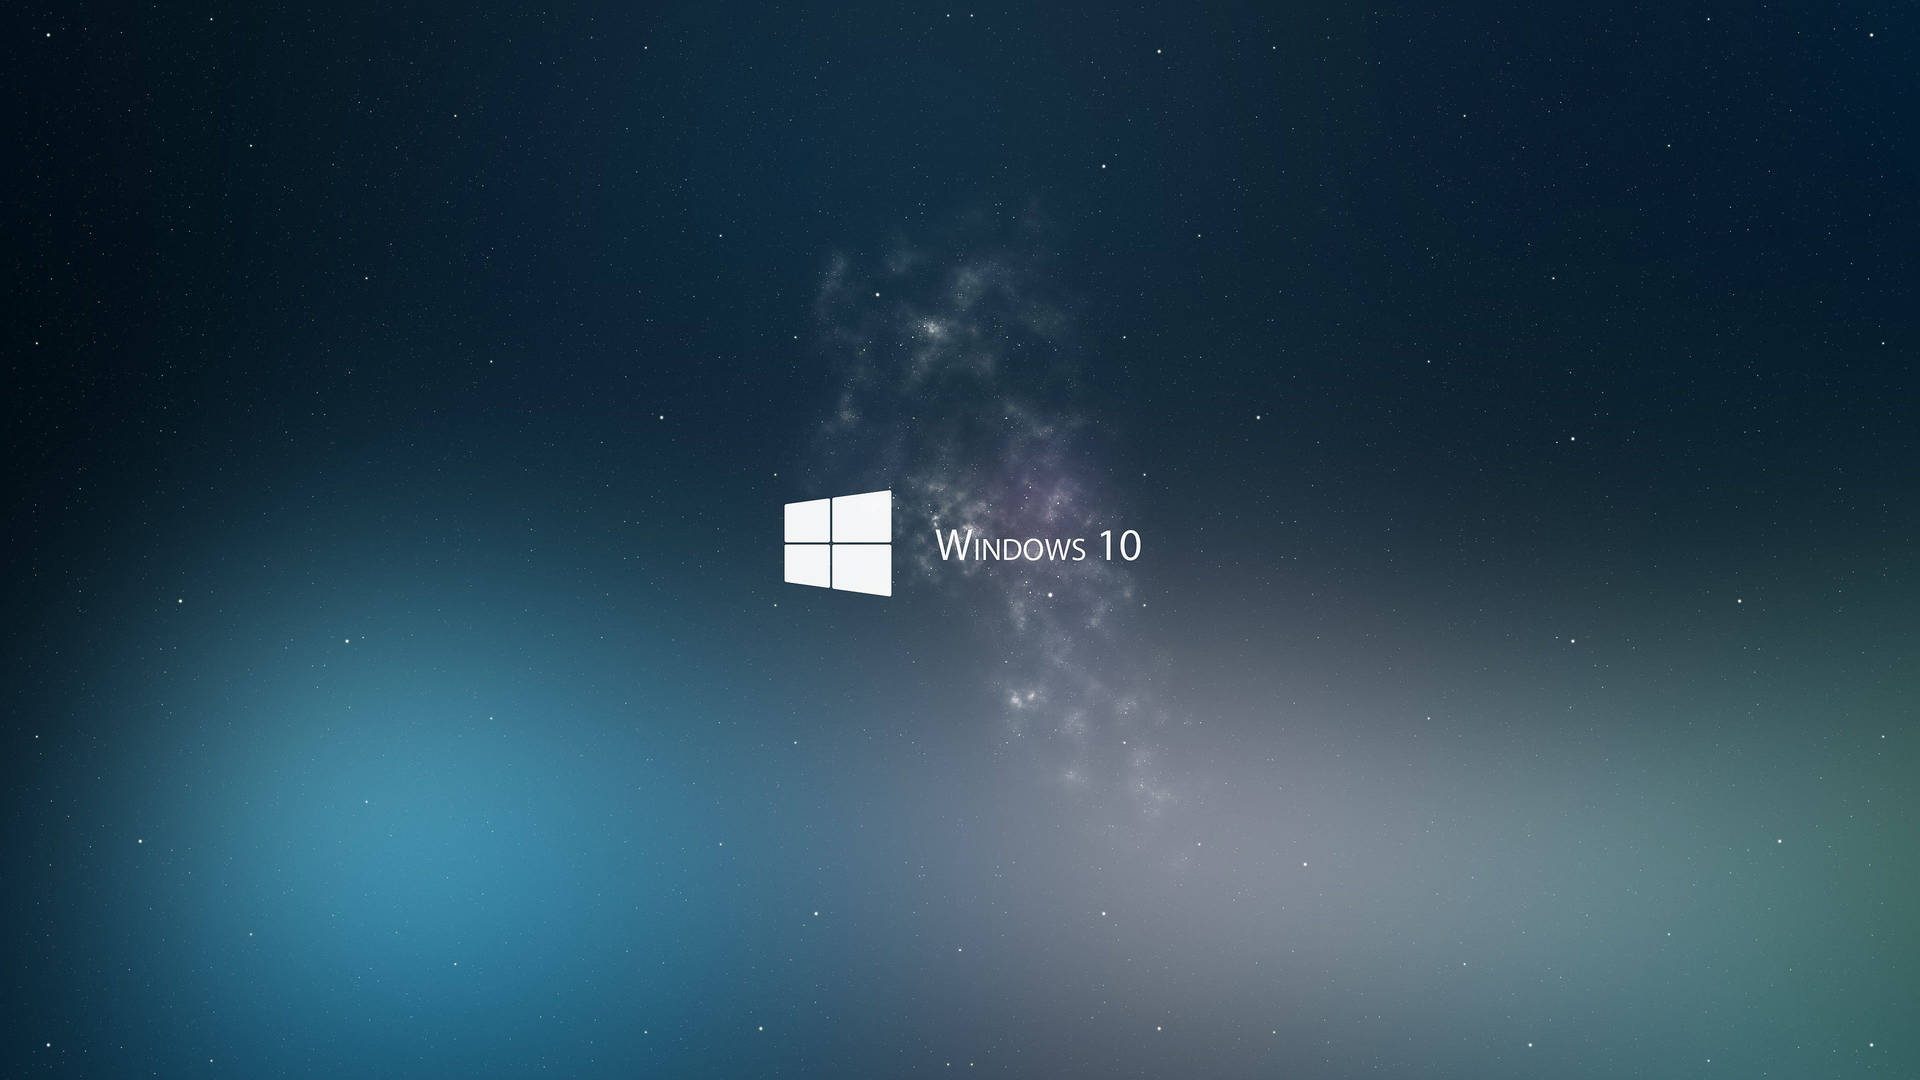 Free Windows 10 Wallpaper Downloads, [100+] Windows 10 Wallpapers for FREE  